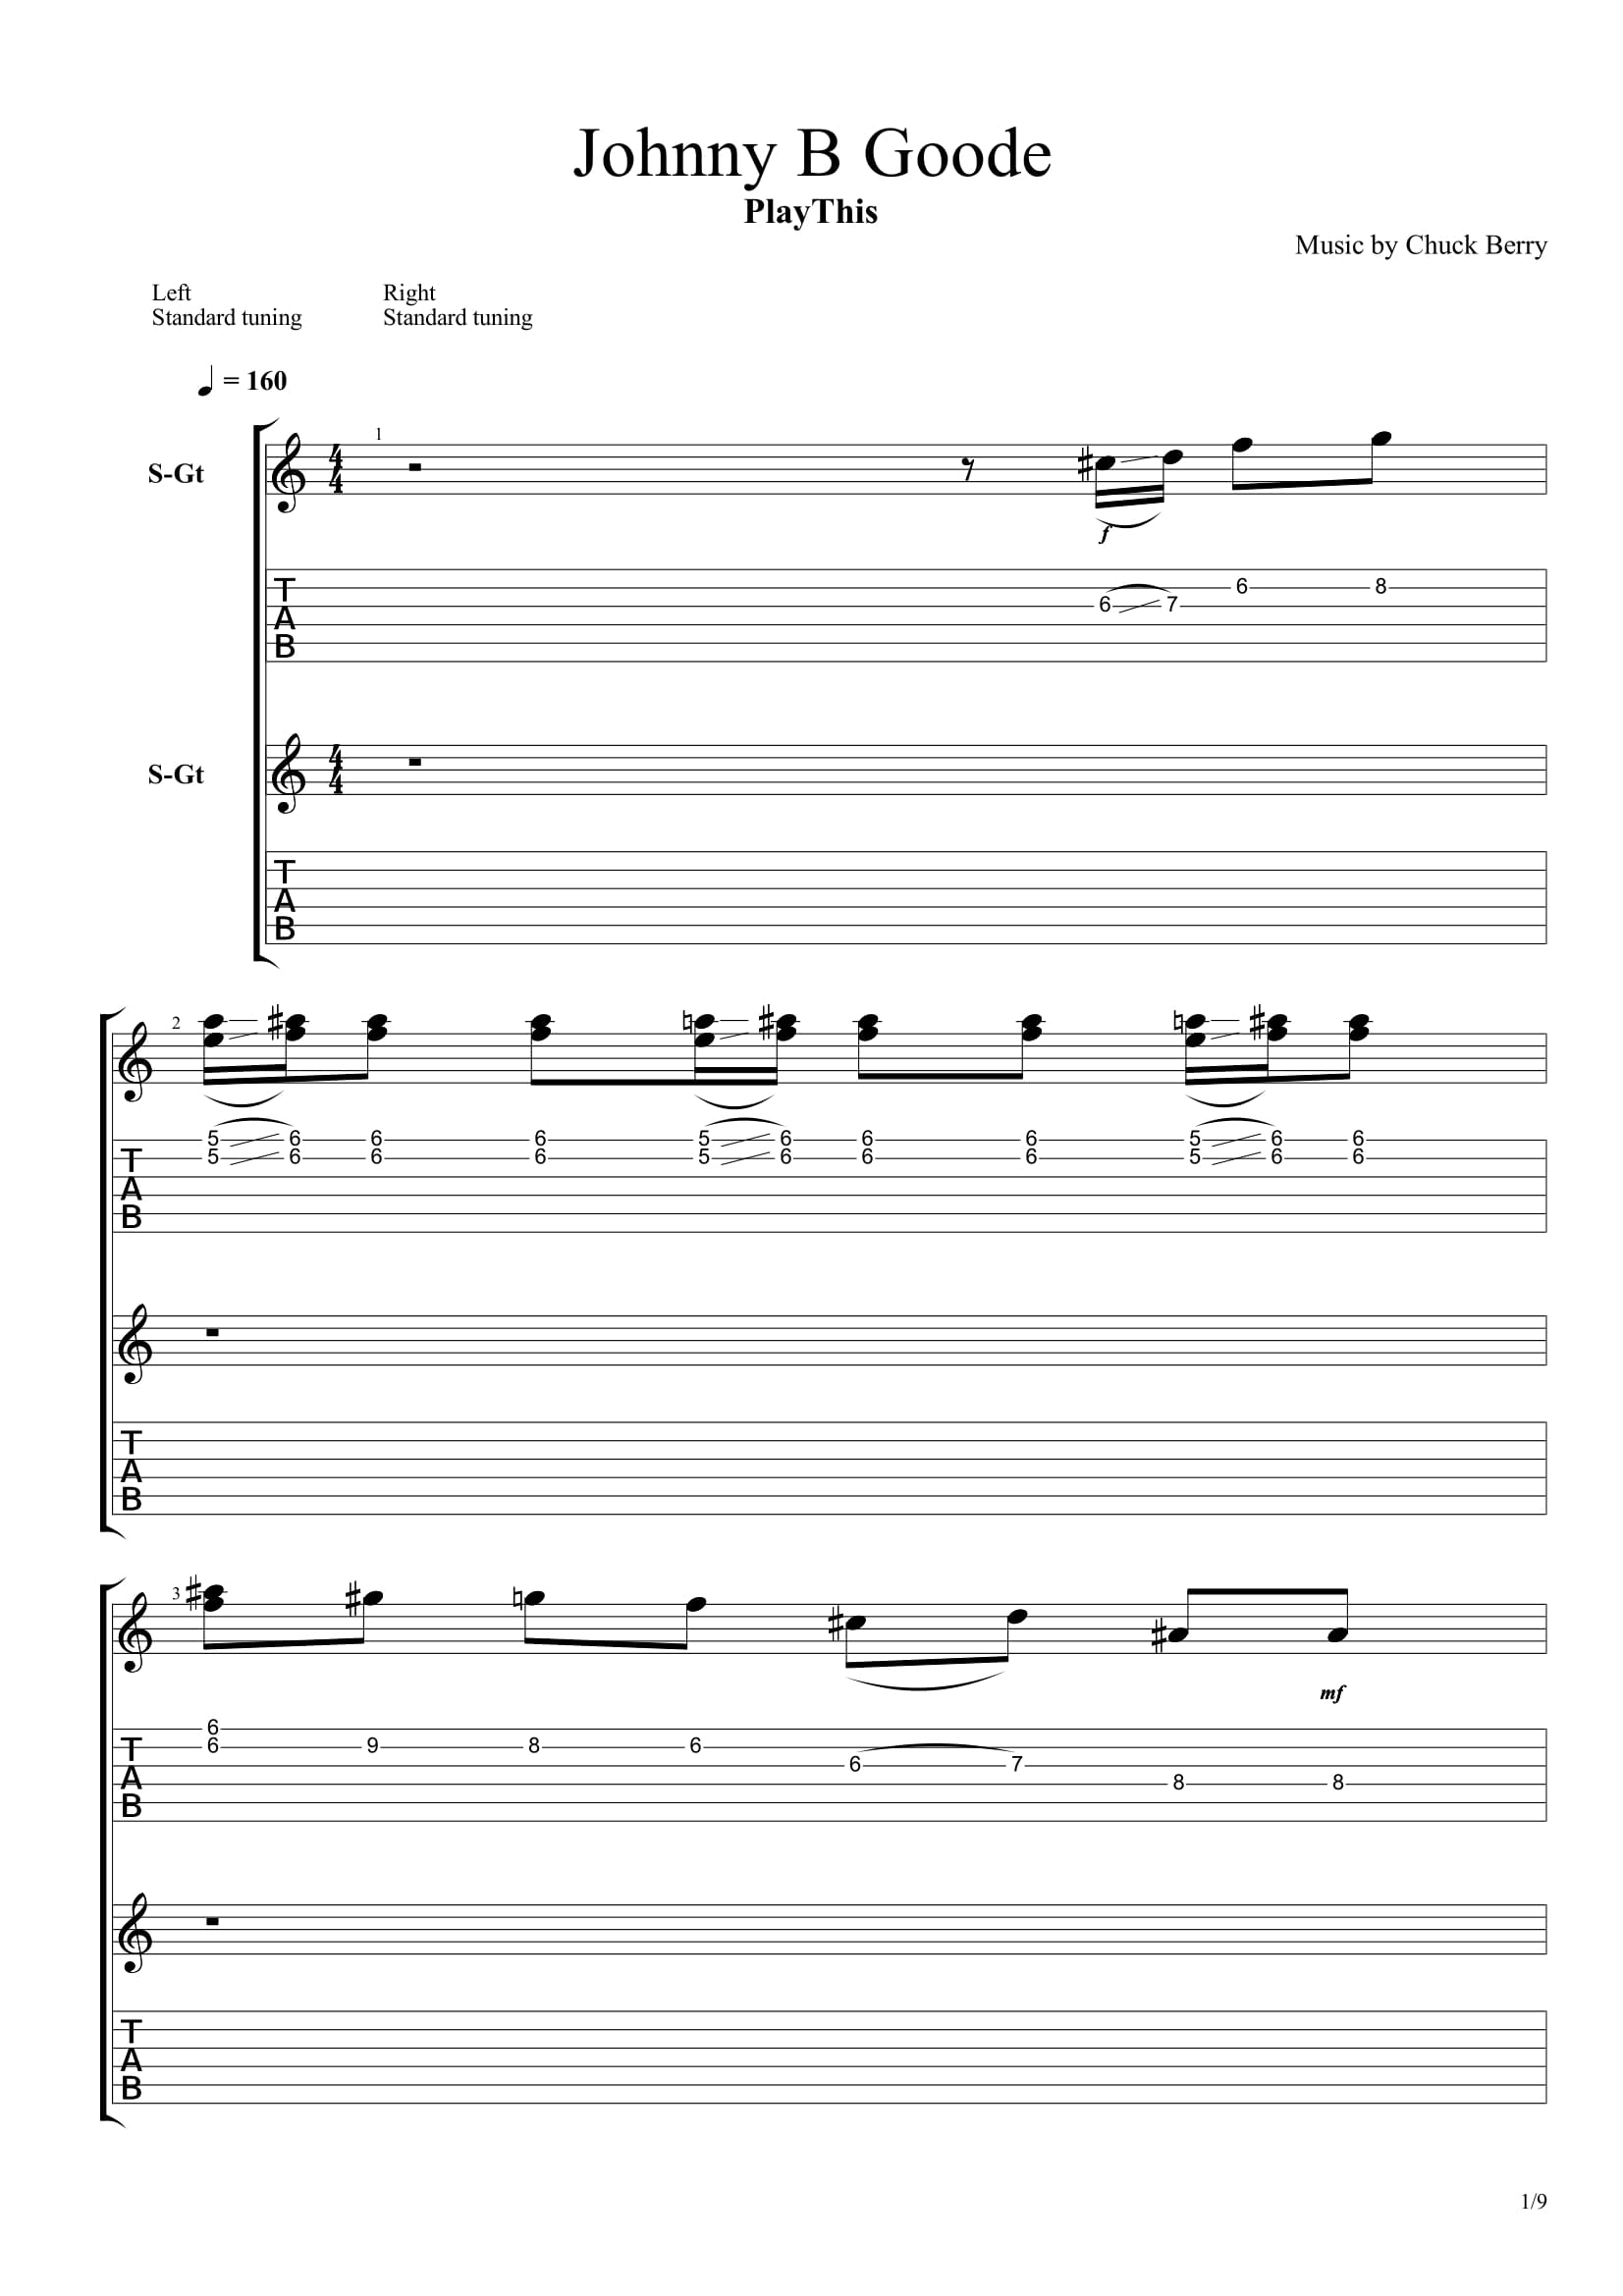 Judas Priest "Johnny B. Goode" Guitar and Bass sheet music | Jellynote